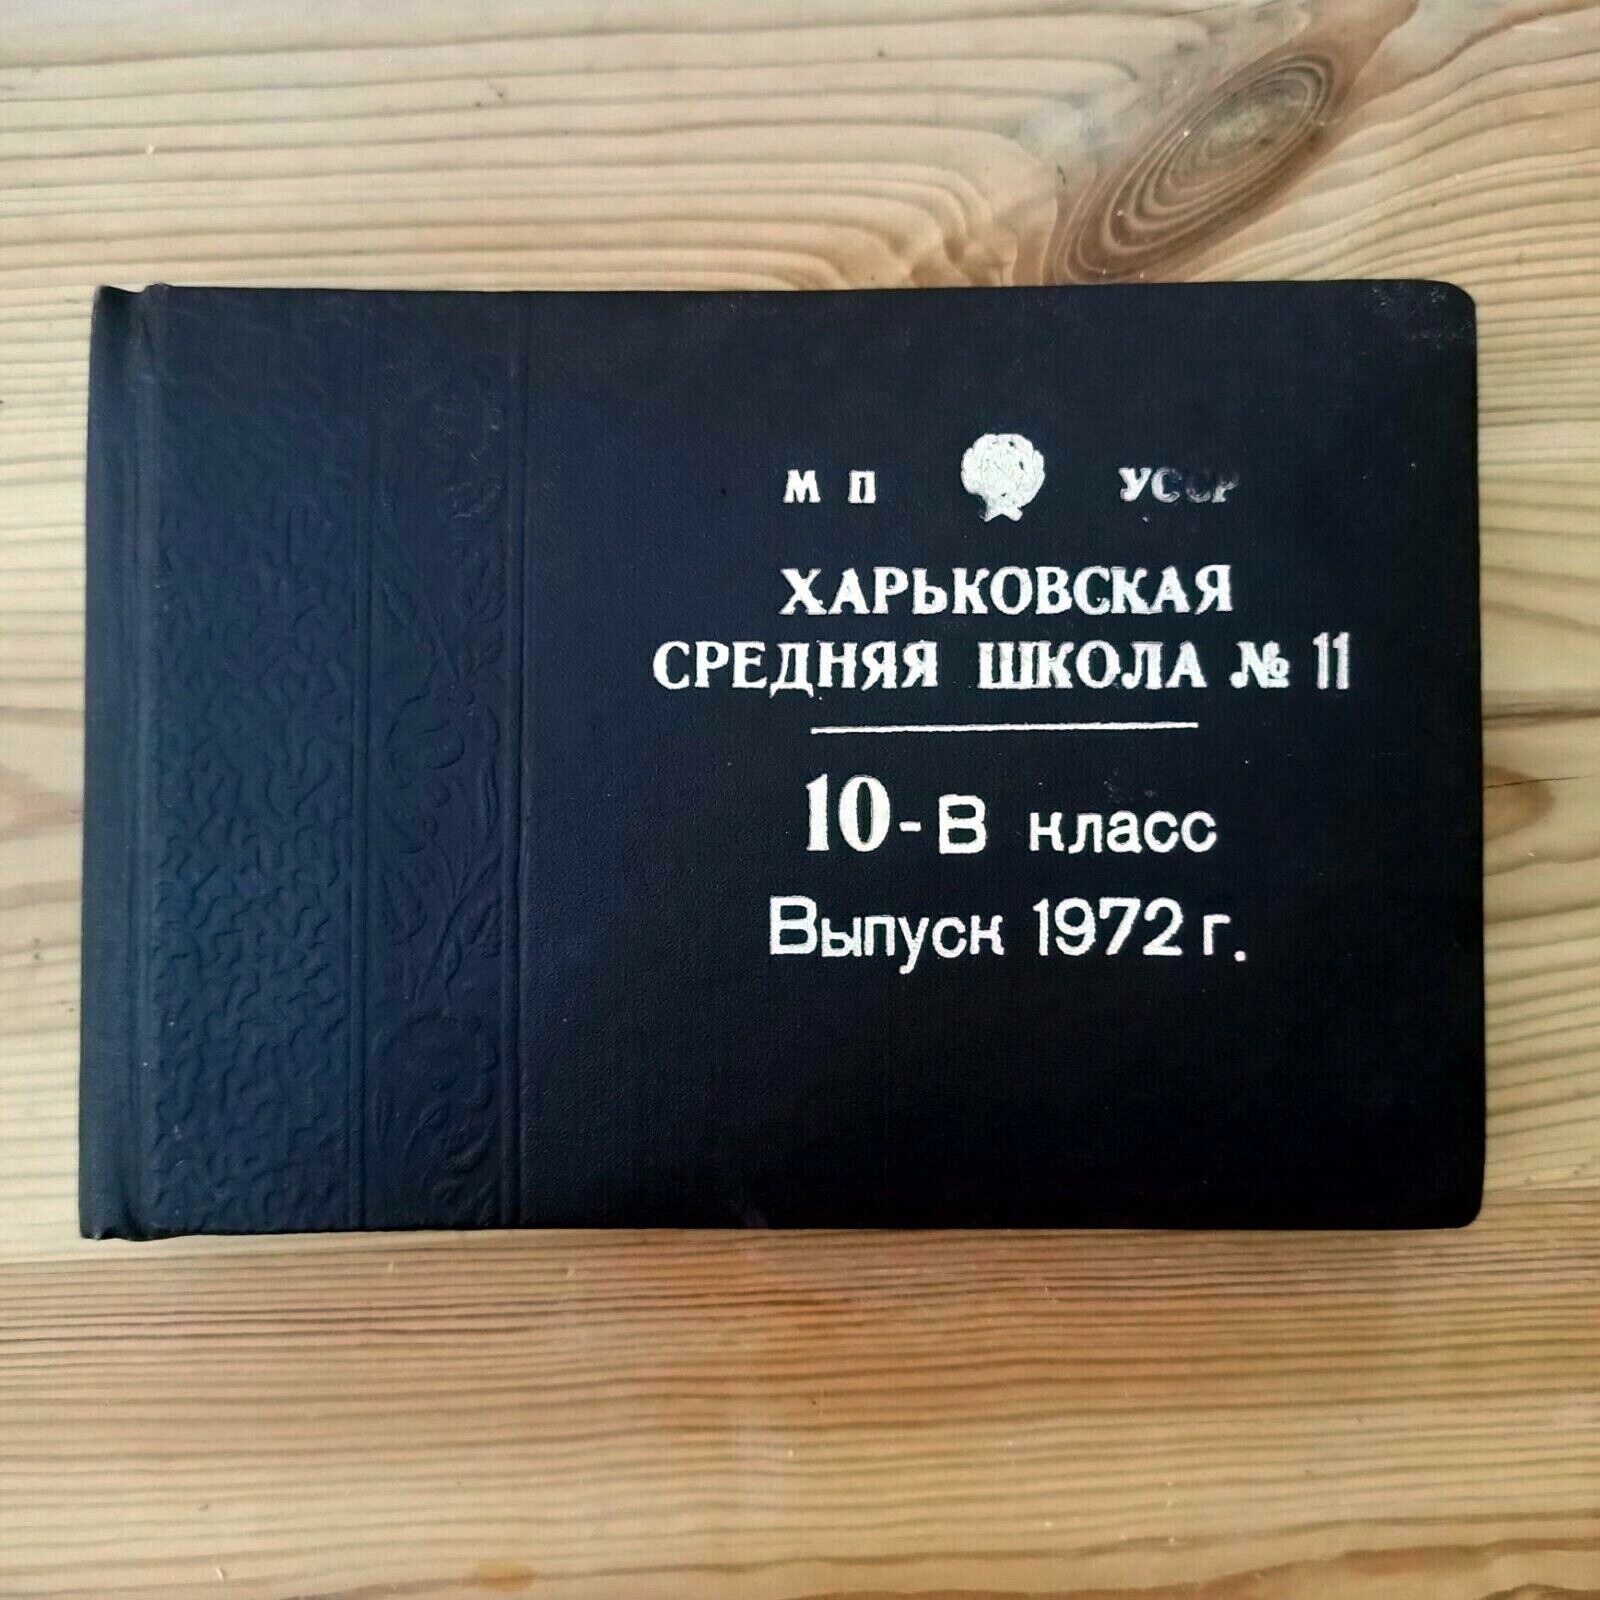 Vintage Russian Soviet School Album Graduation USSR Photo Collectibles Retro VTG